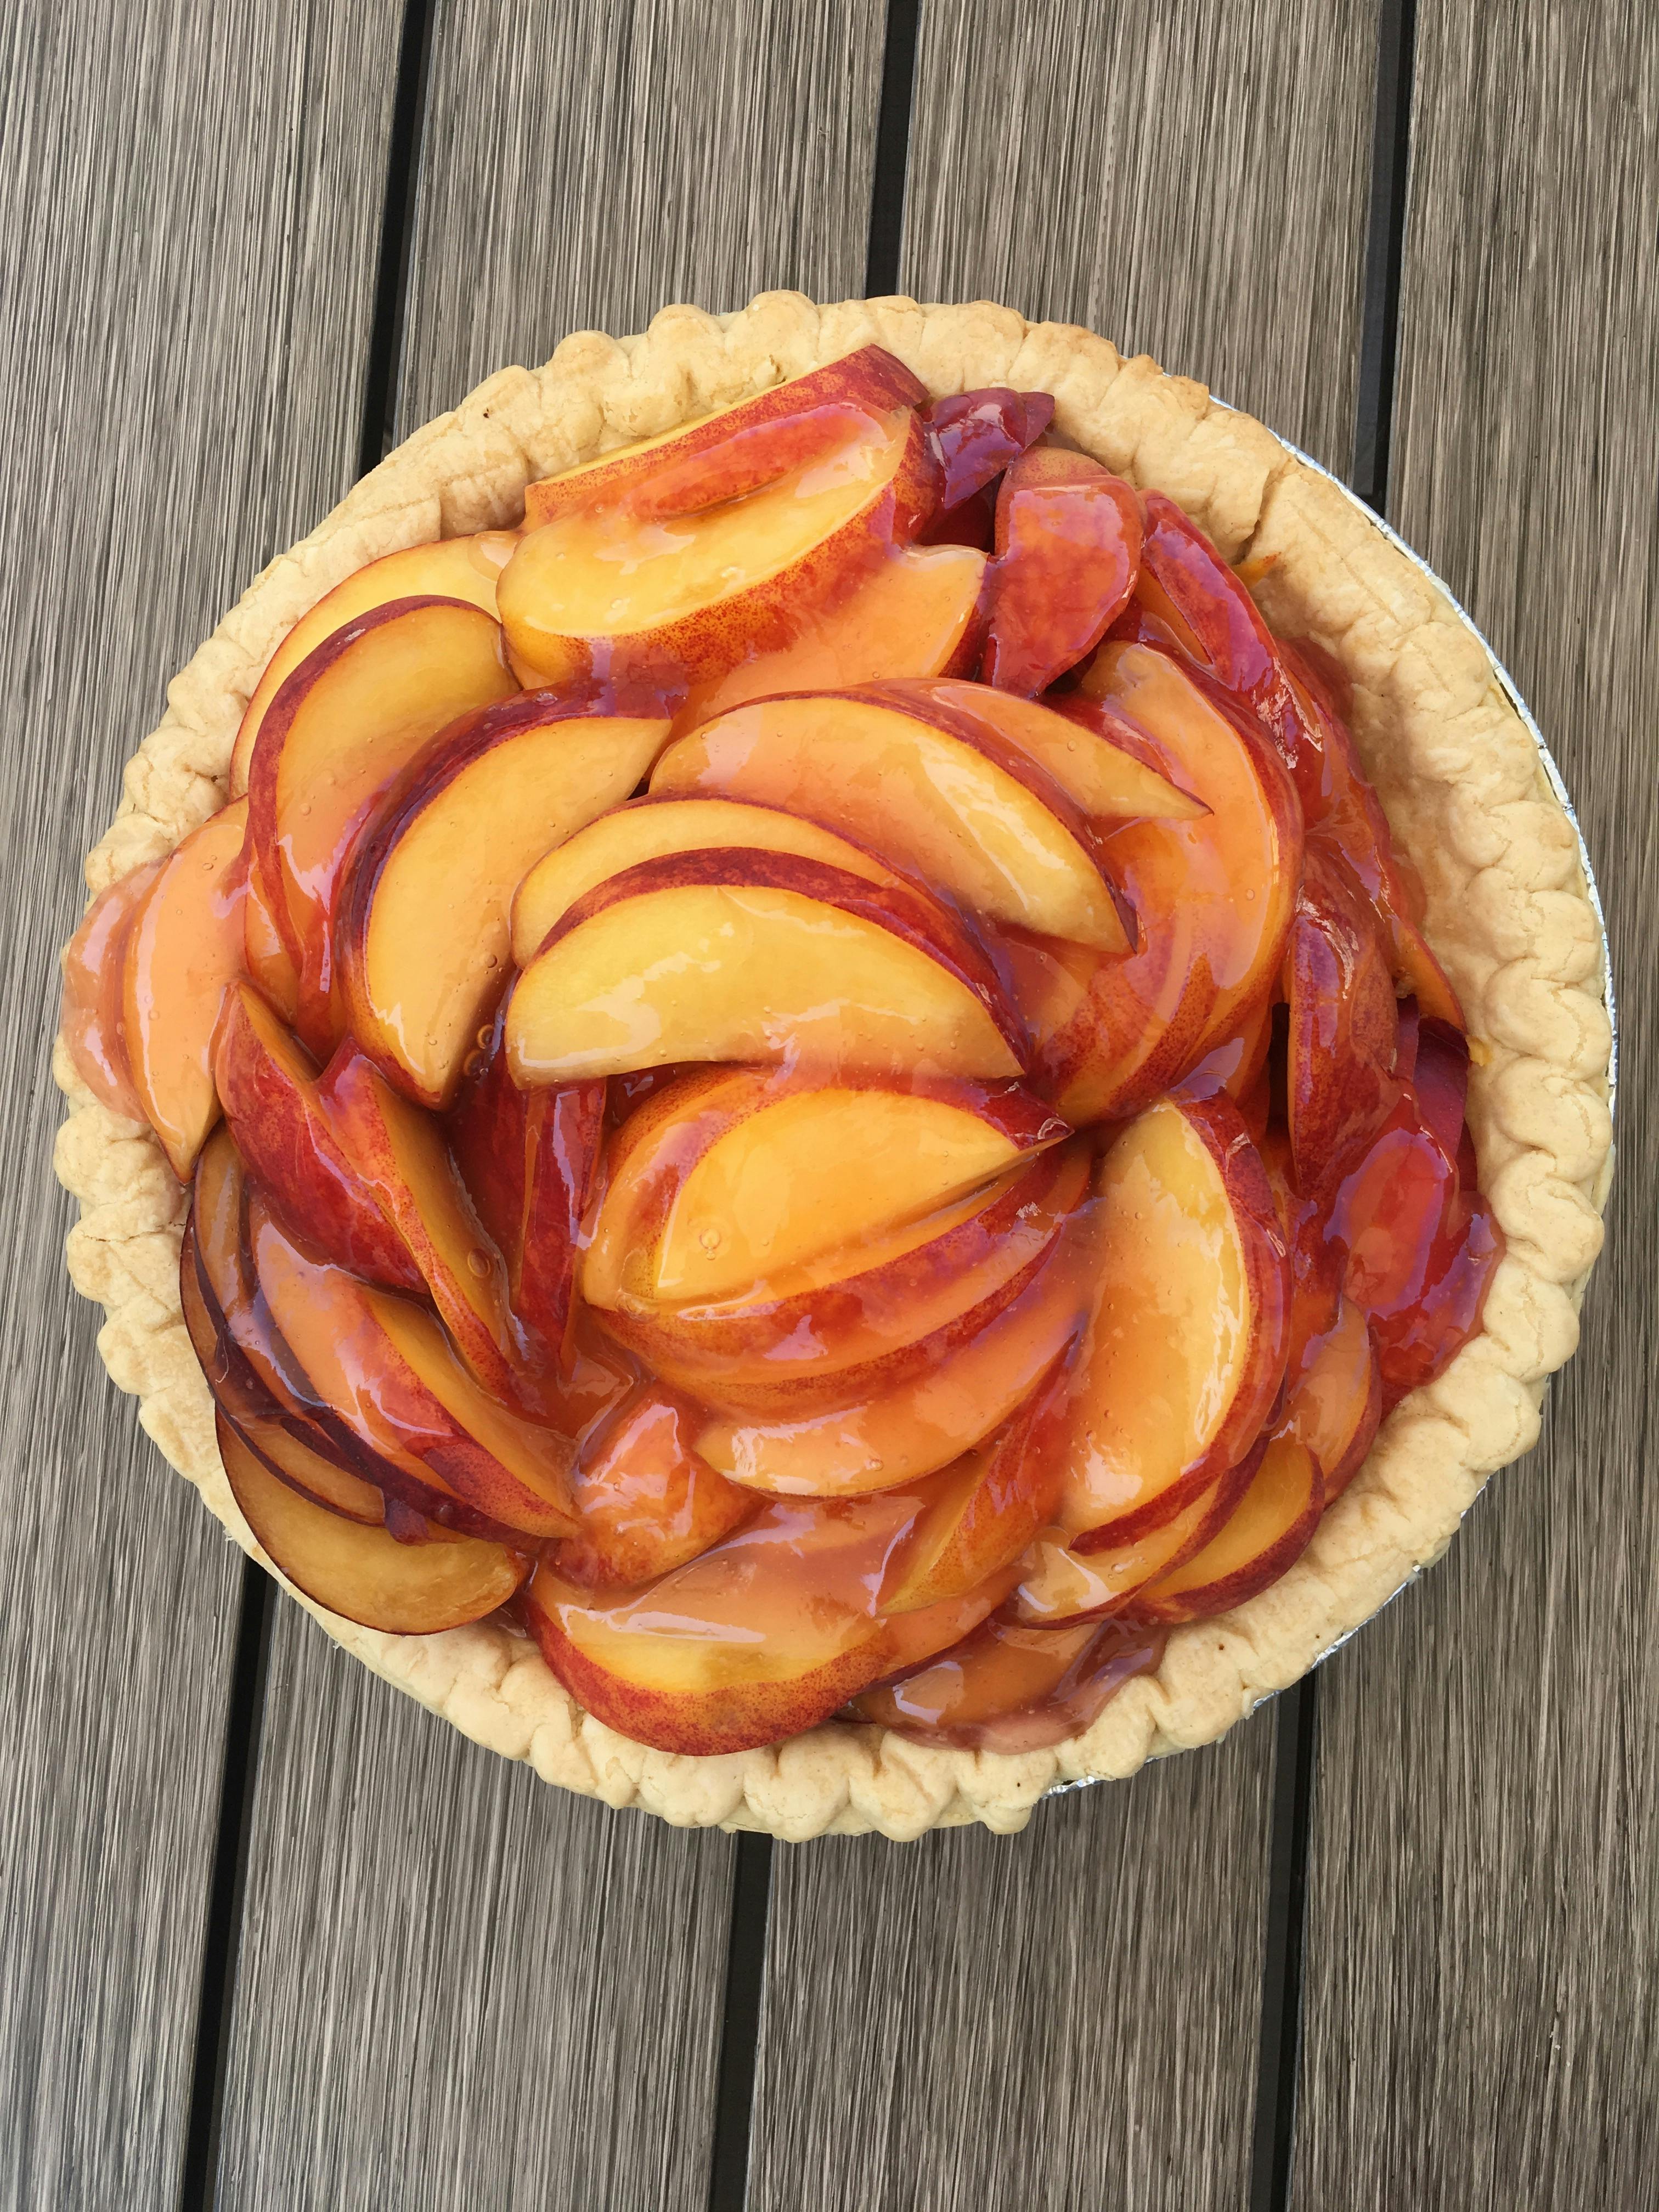 Free stock photo of Peach pie dessert